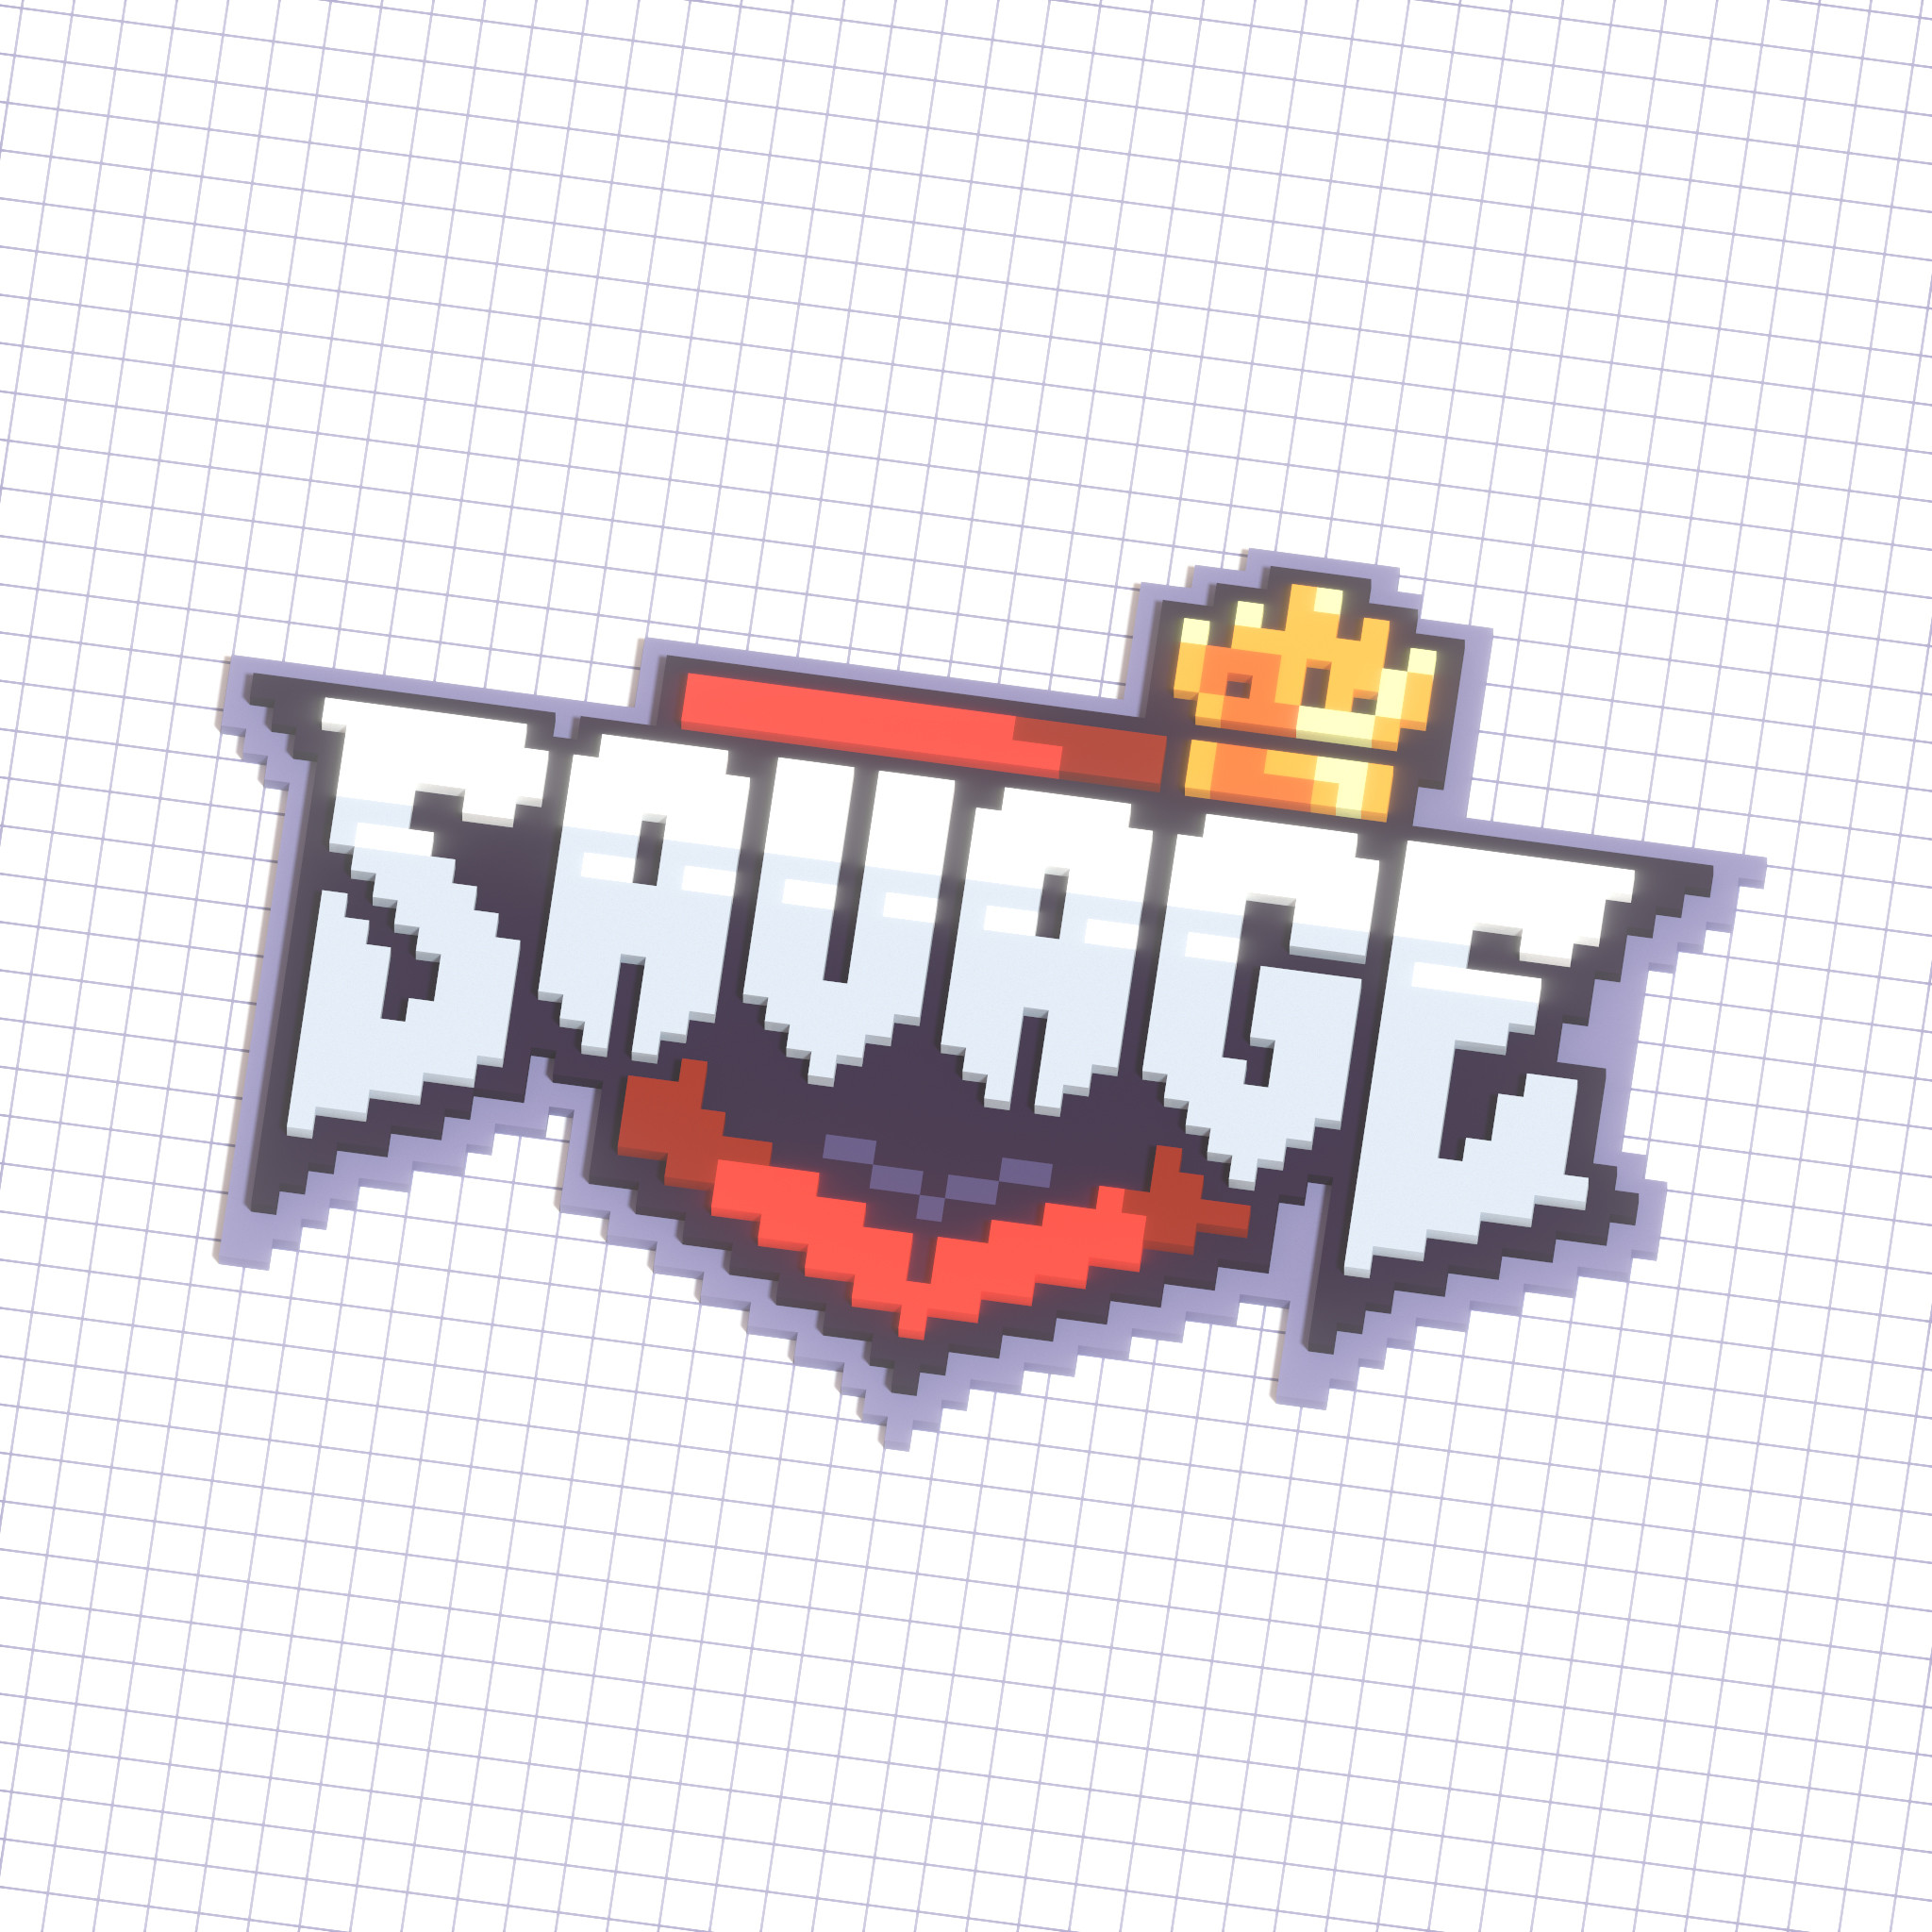 Rendering of the voxel \ "pixel" rendition of Richie's "Savage" logo design.